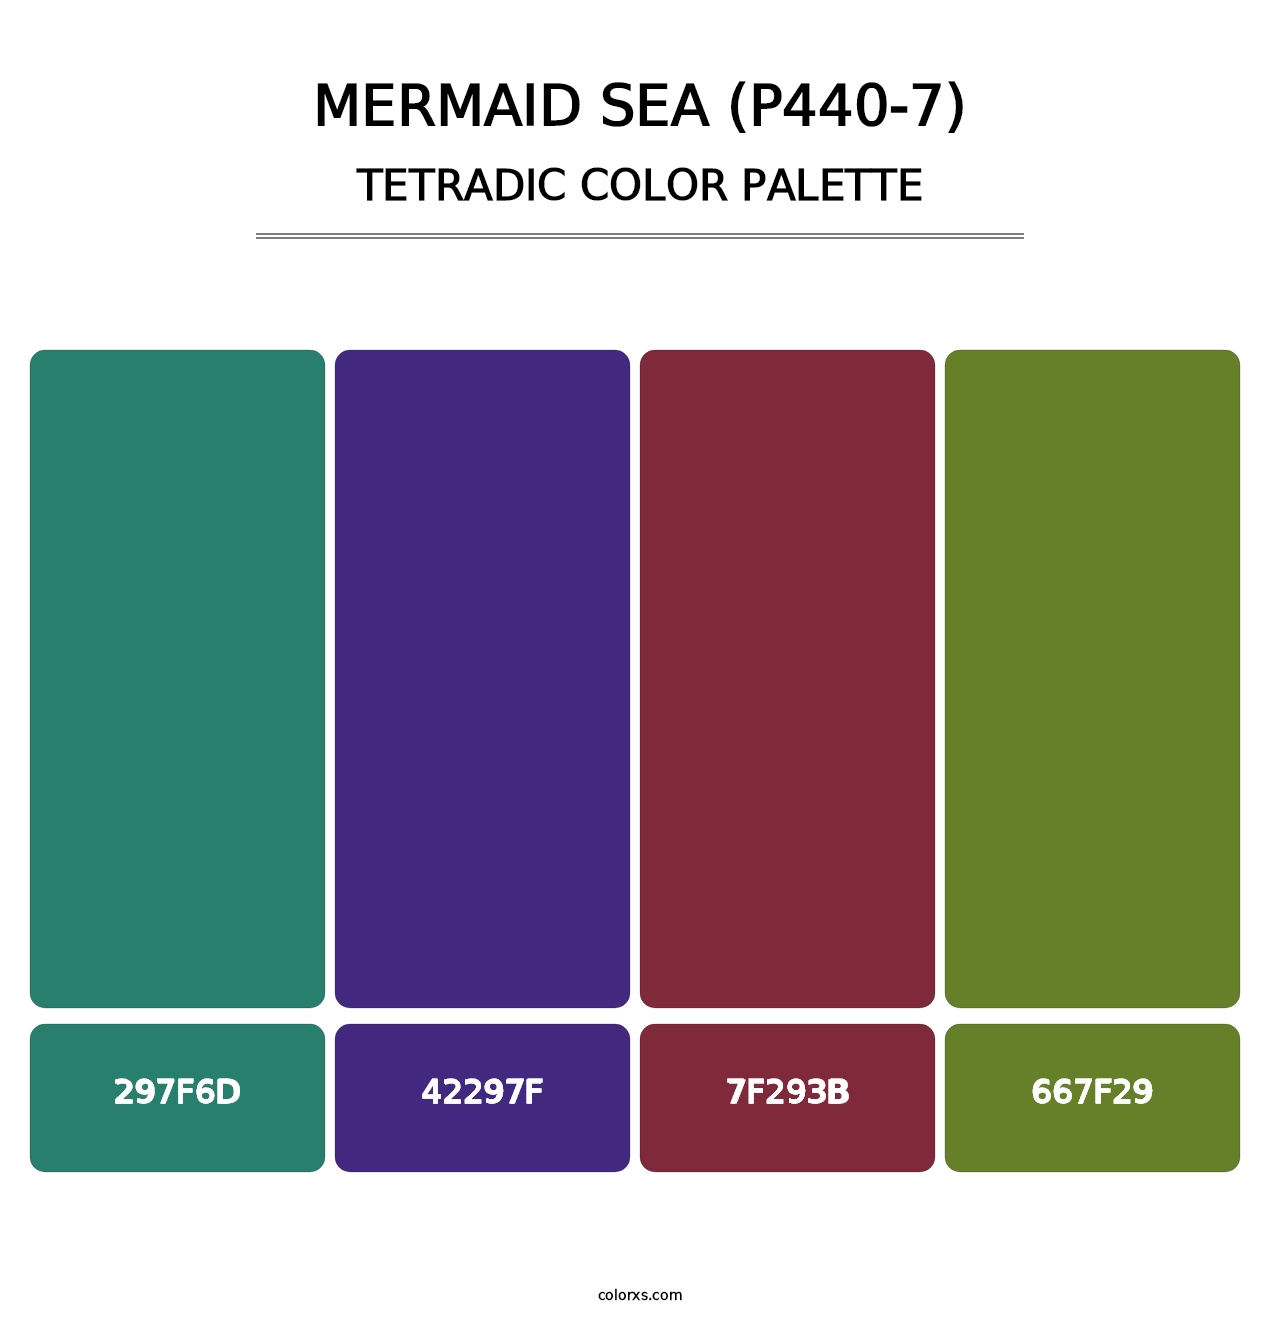 Mermaid Sea (P440-7) - Tetradic Color Palette